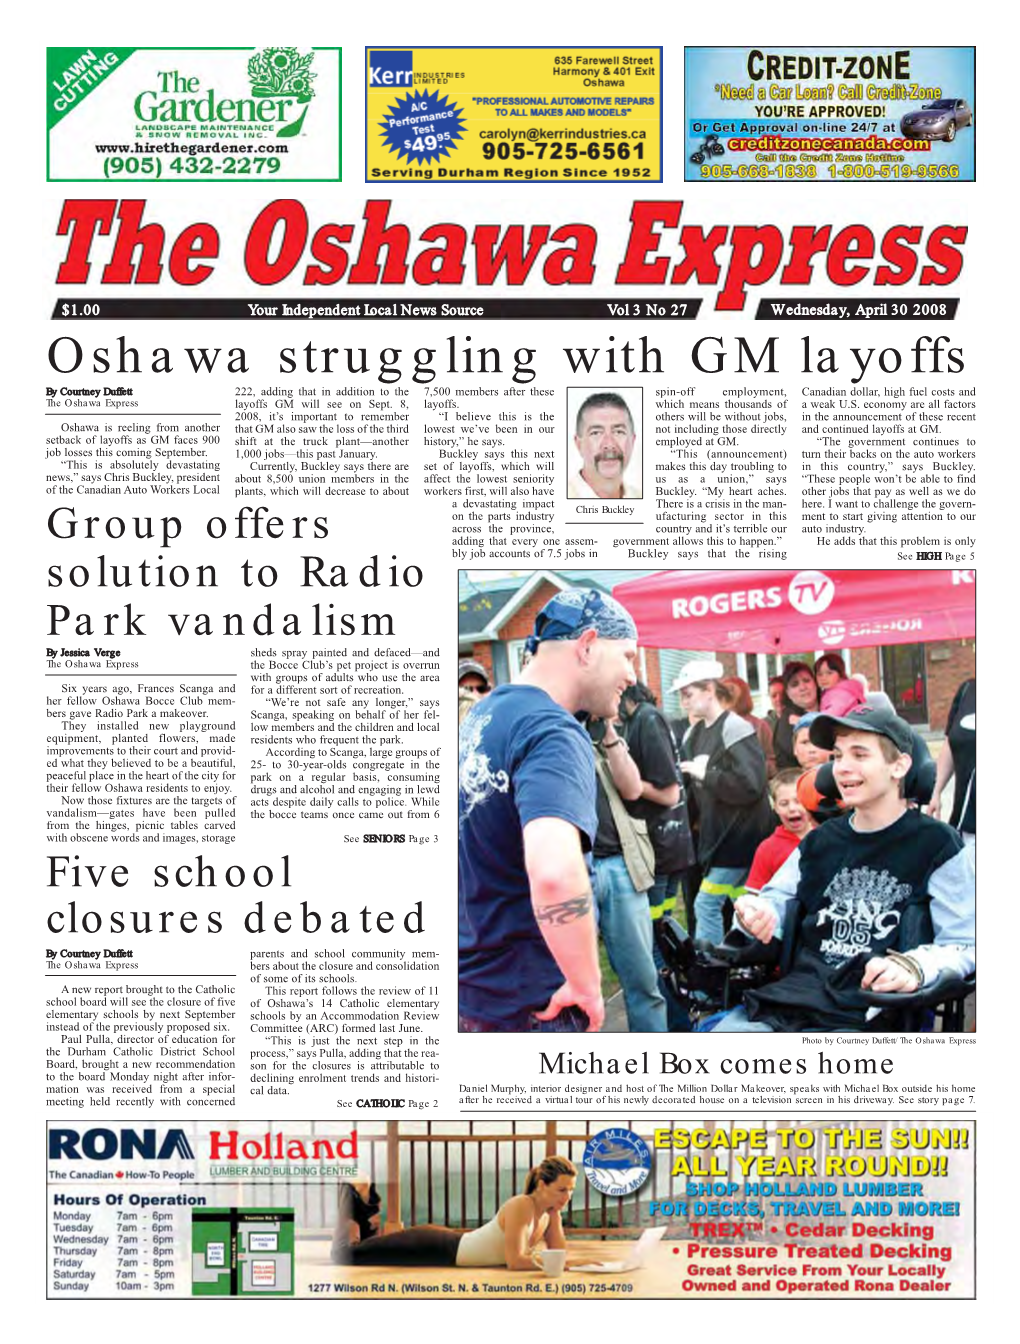 Oshawa Struggling with GM Layoffs